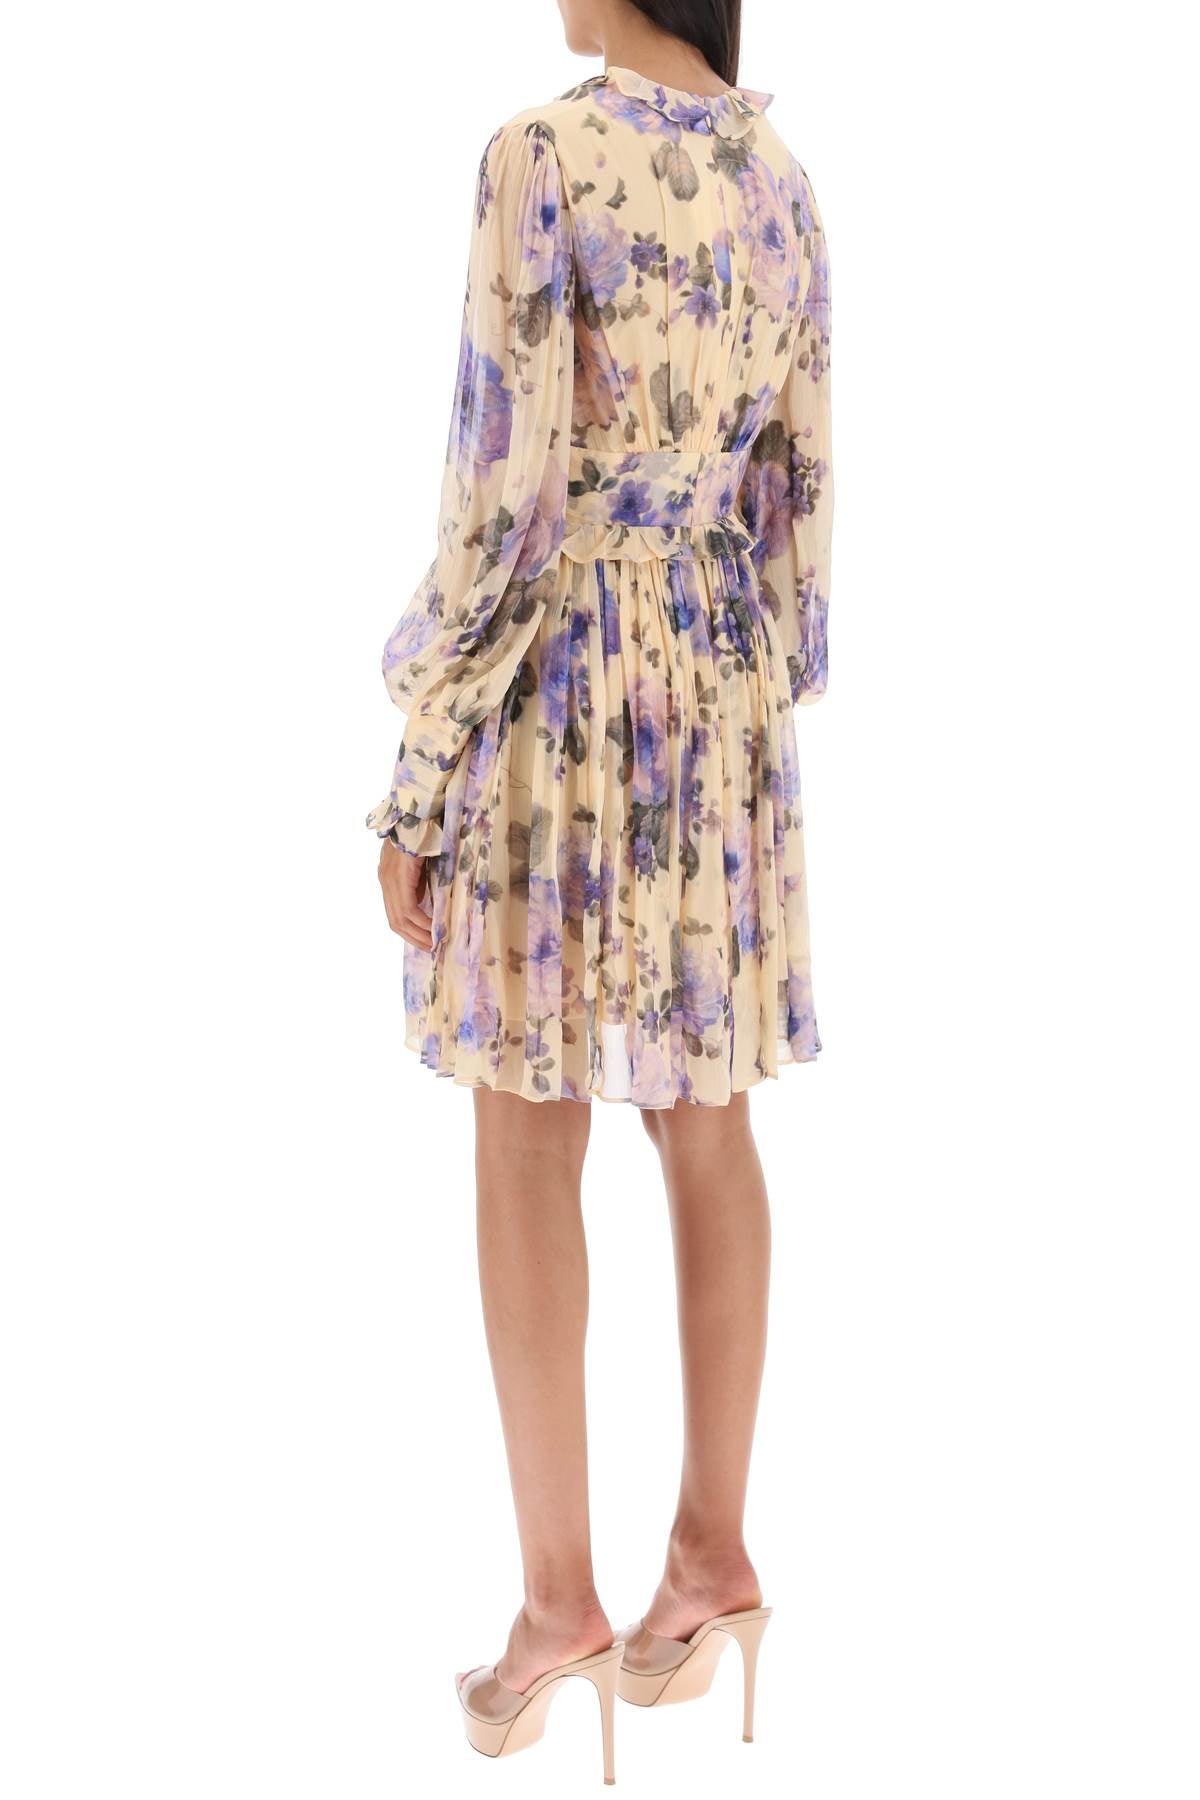 ZIMMERMANN Lyrical Chiffon Mini Dress for Women - Floral Print Long Sleeve Dress with V-Neckline and Circle Skirt